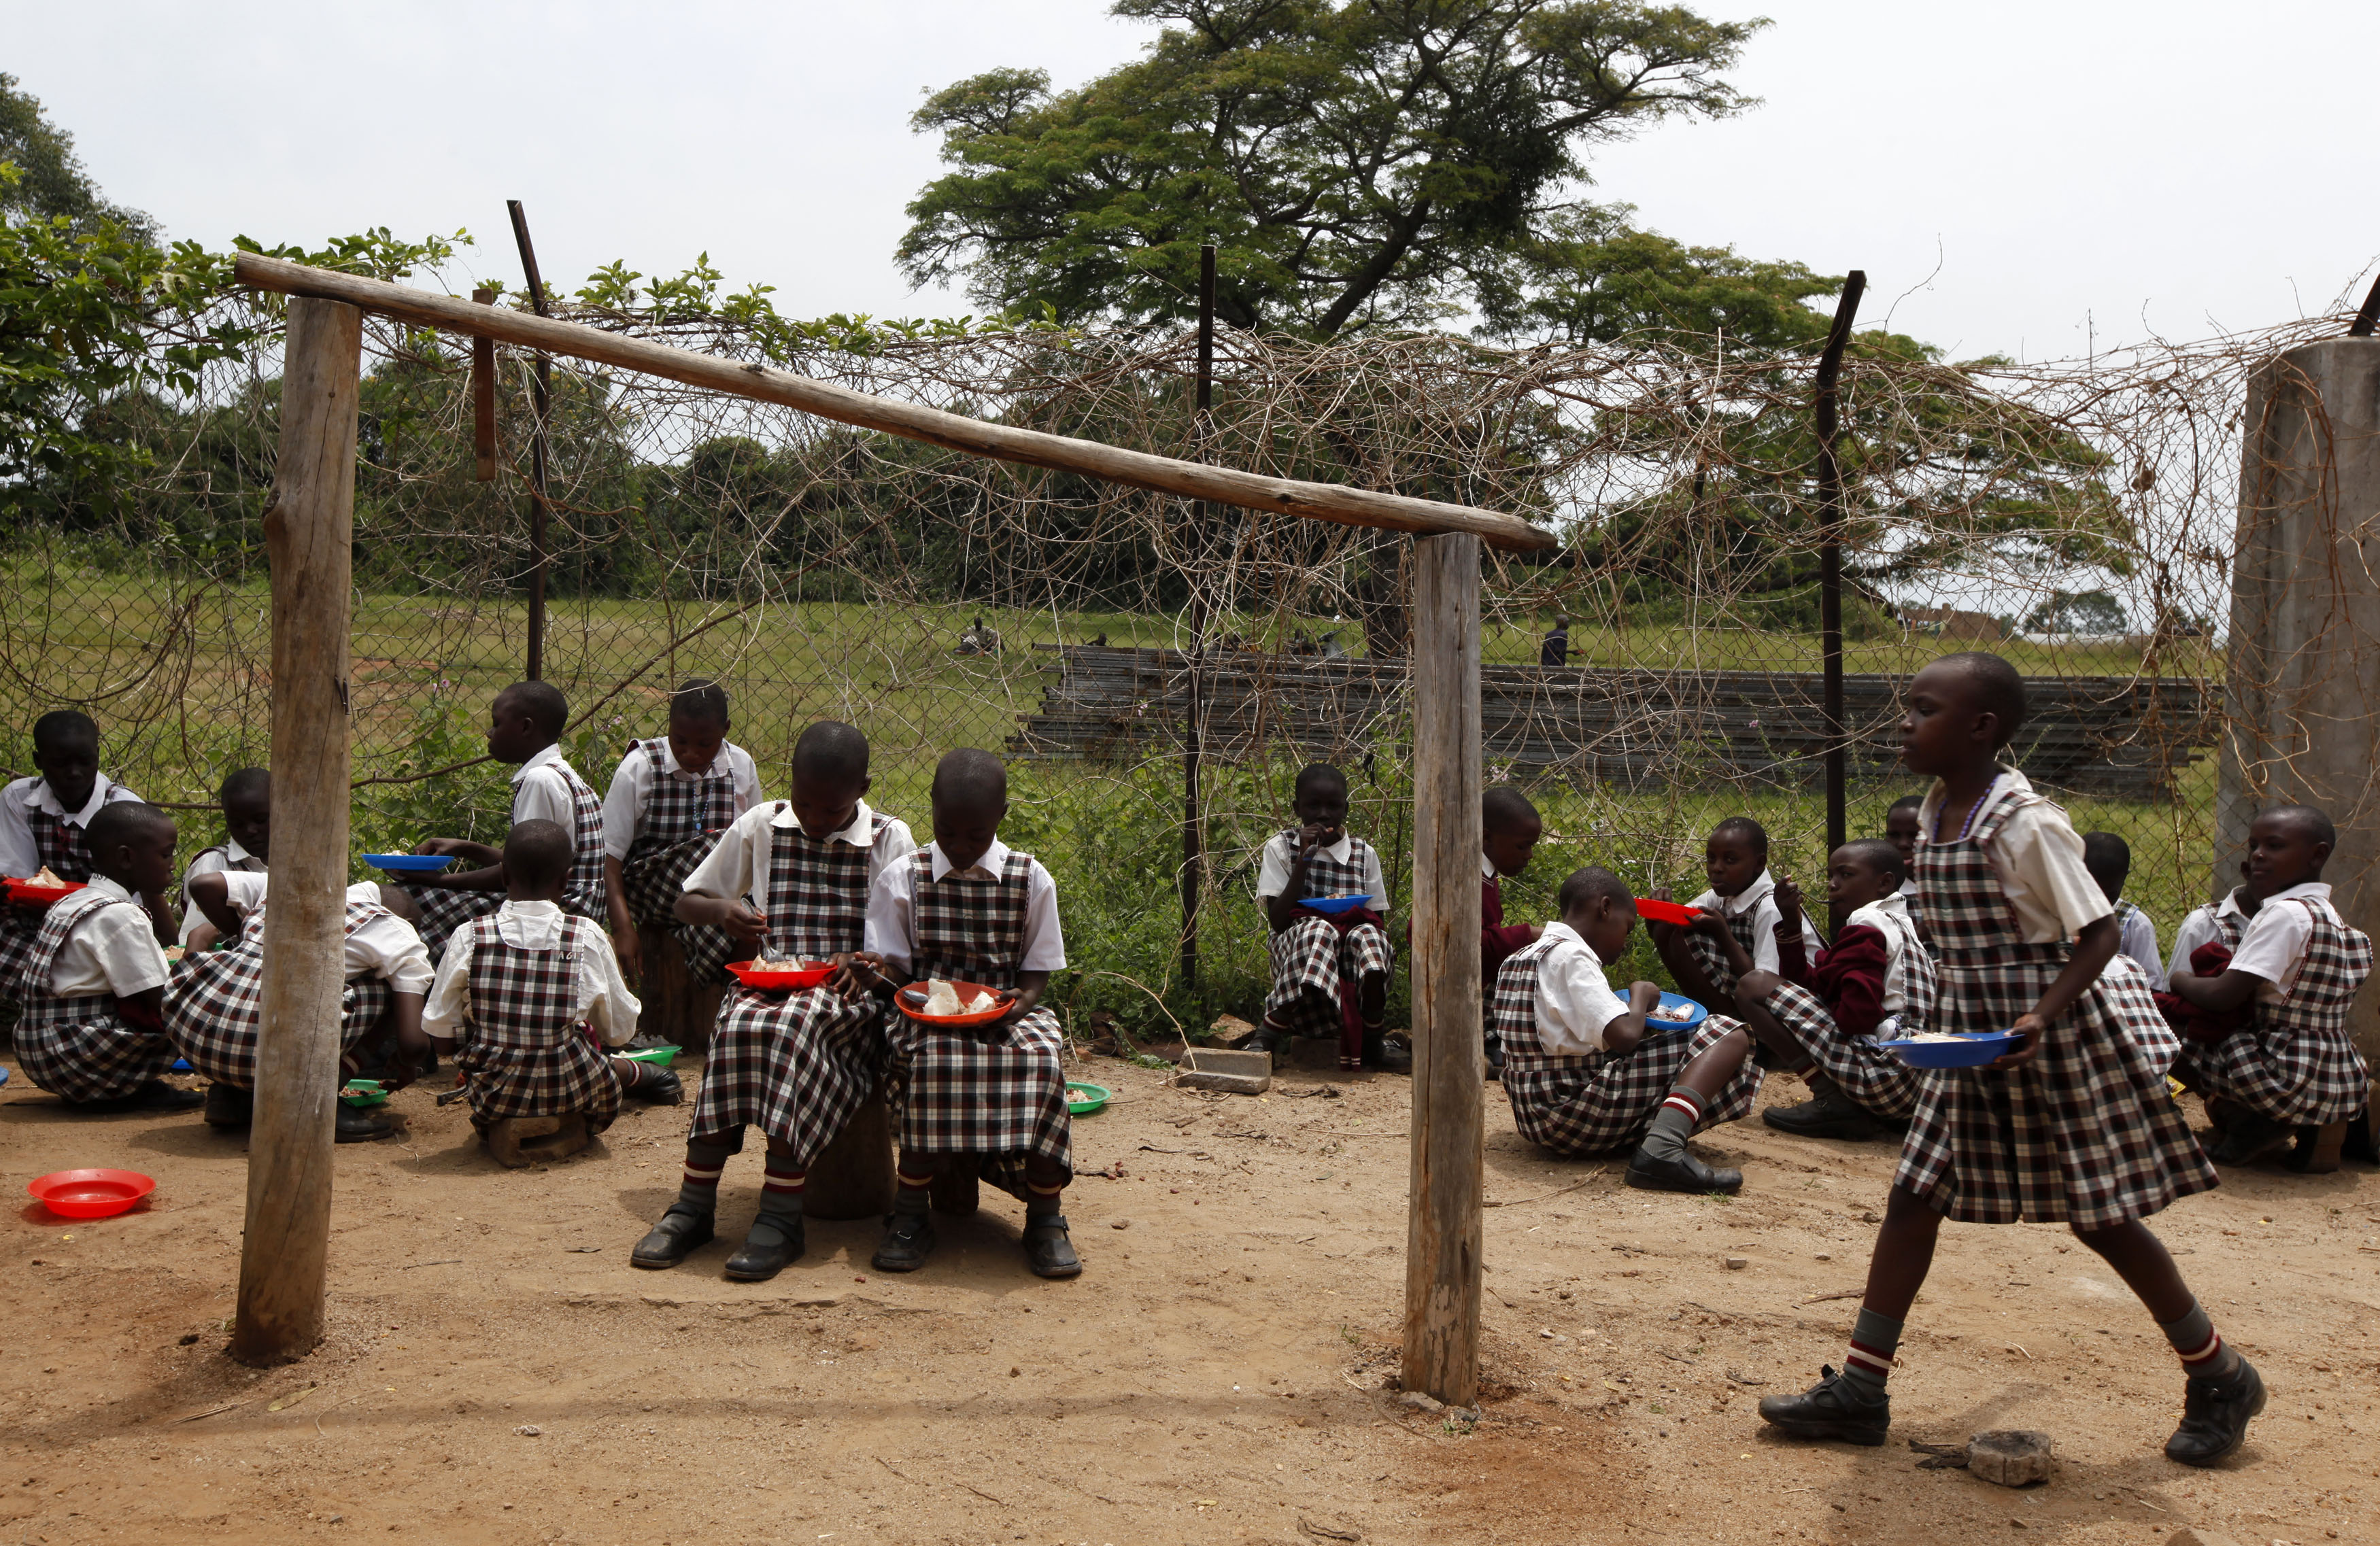 Teachers can empower girls through sex education in Uganda | Brookings